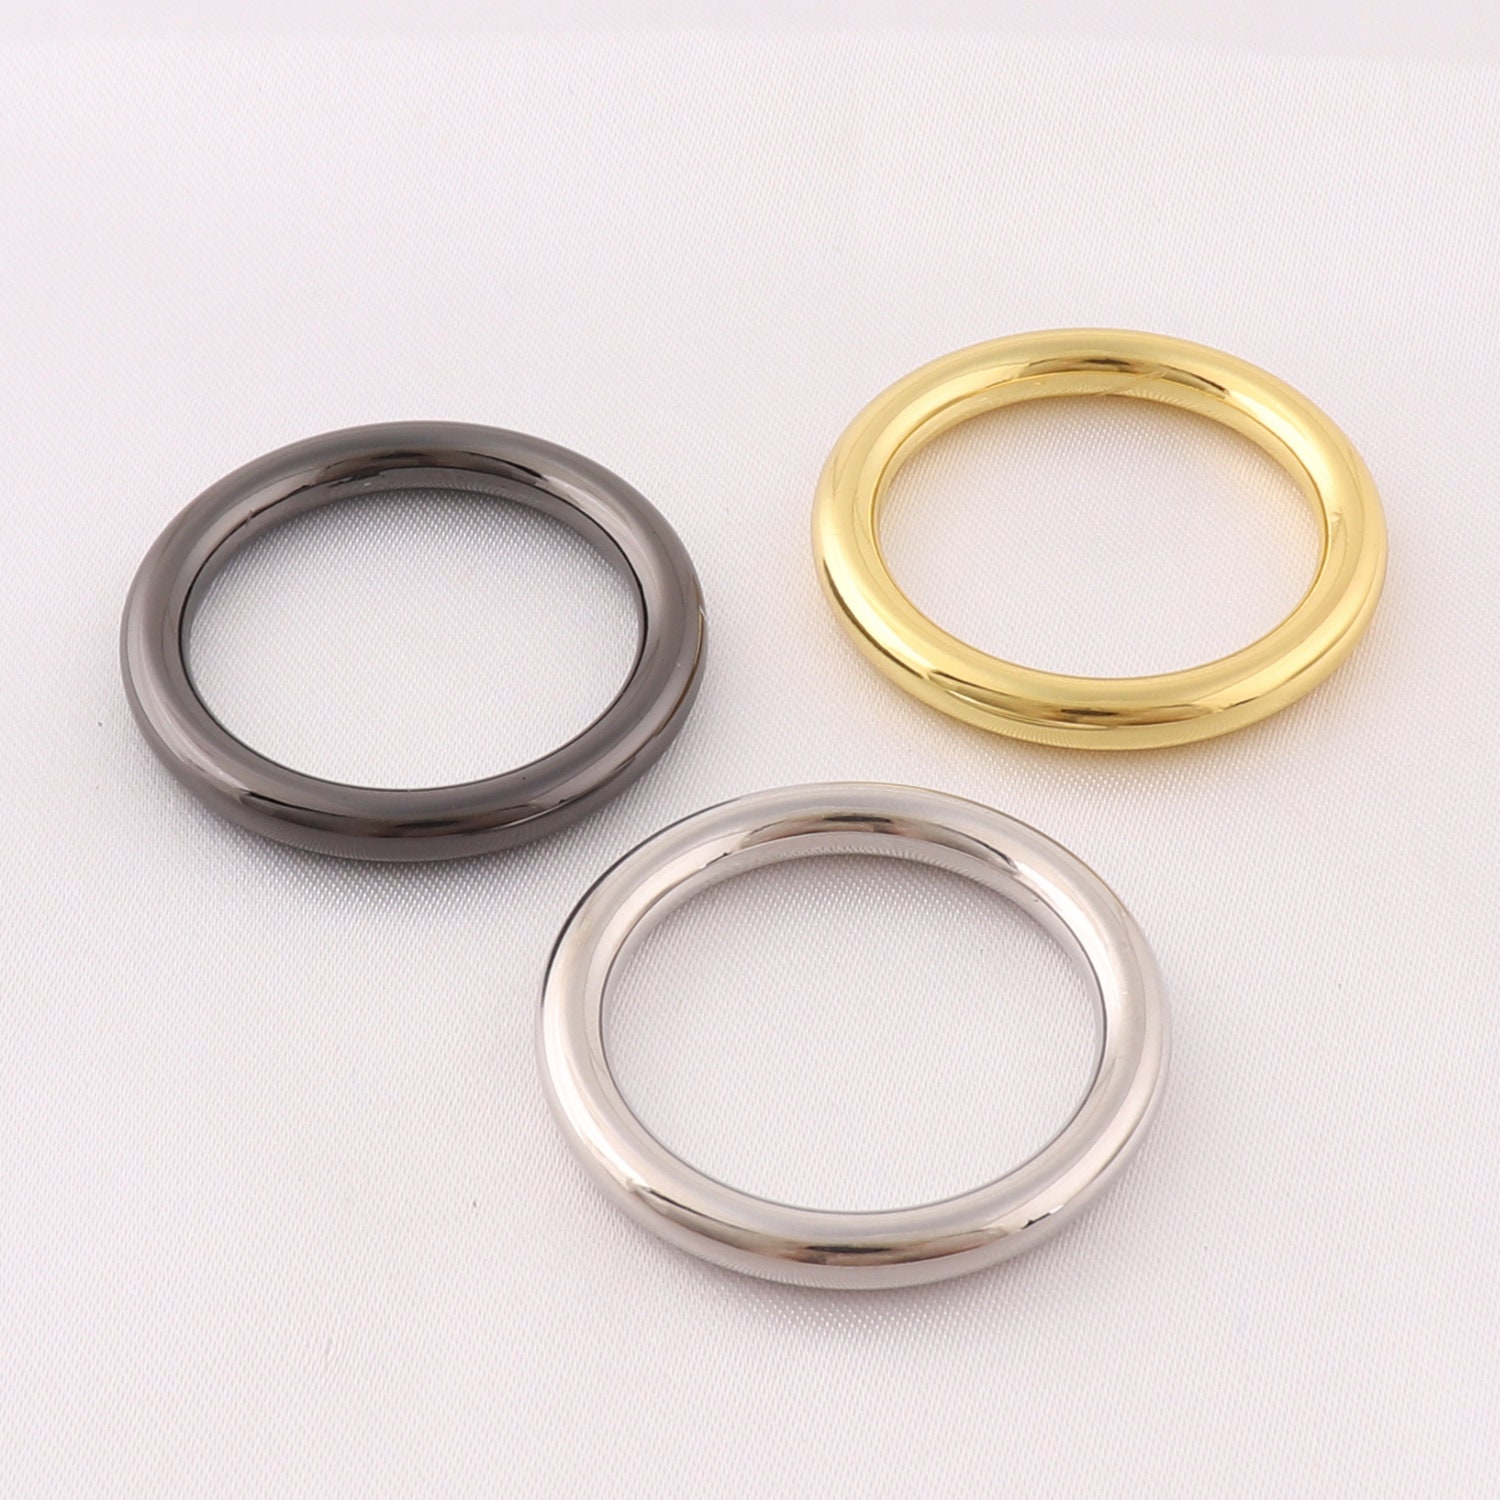 25 mm Metal O Ring Belt BucklesRound O rings Belt Strap | Etsy